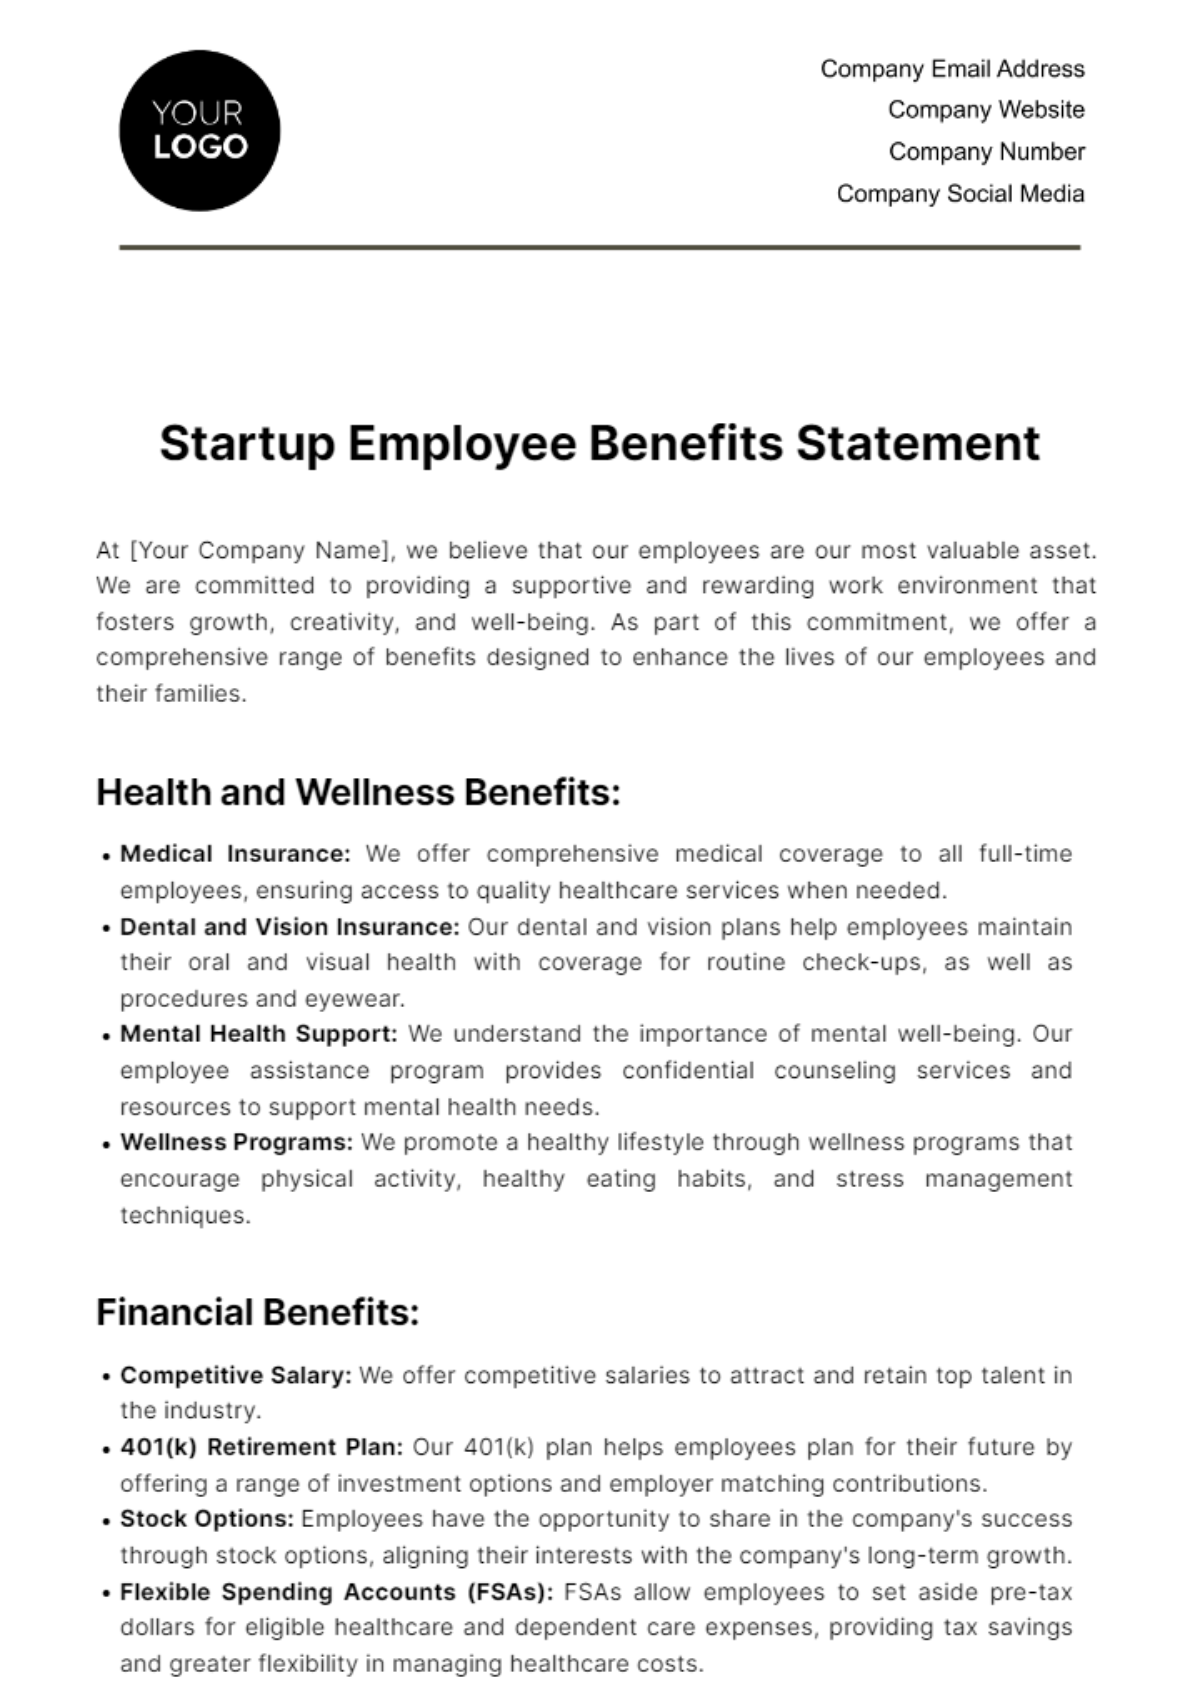 Free Startup Employee Benefits Statement Template